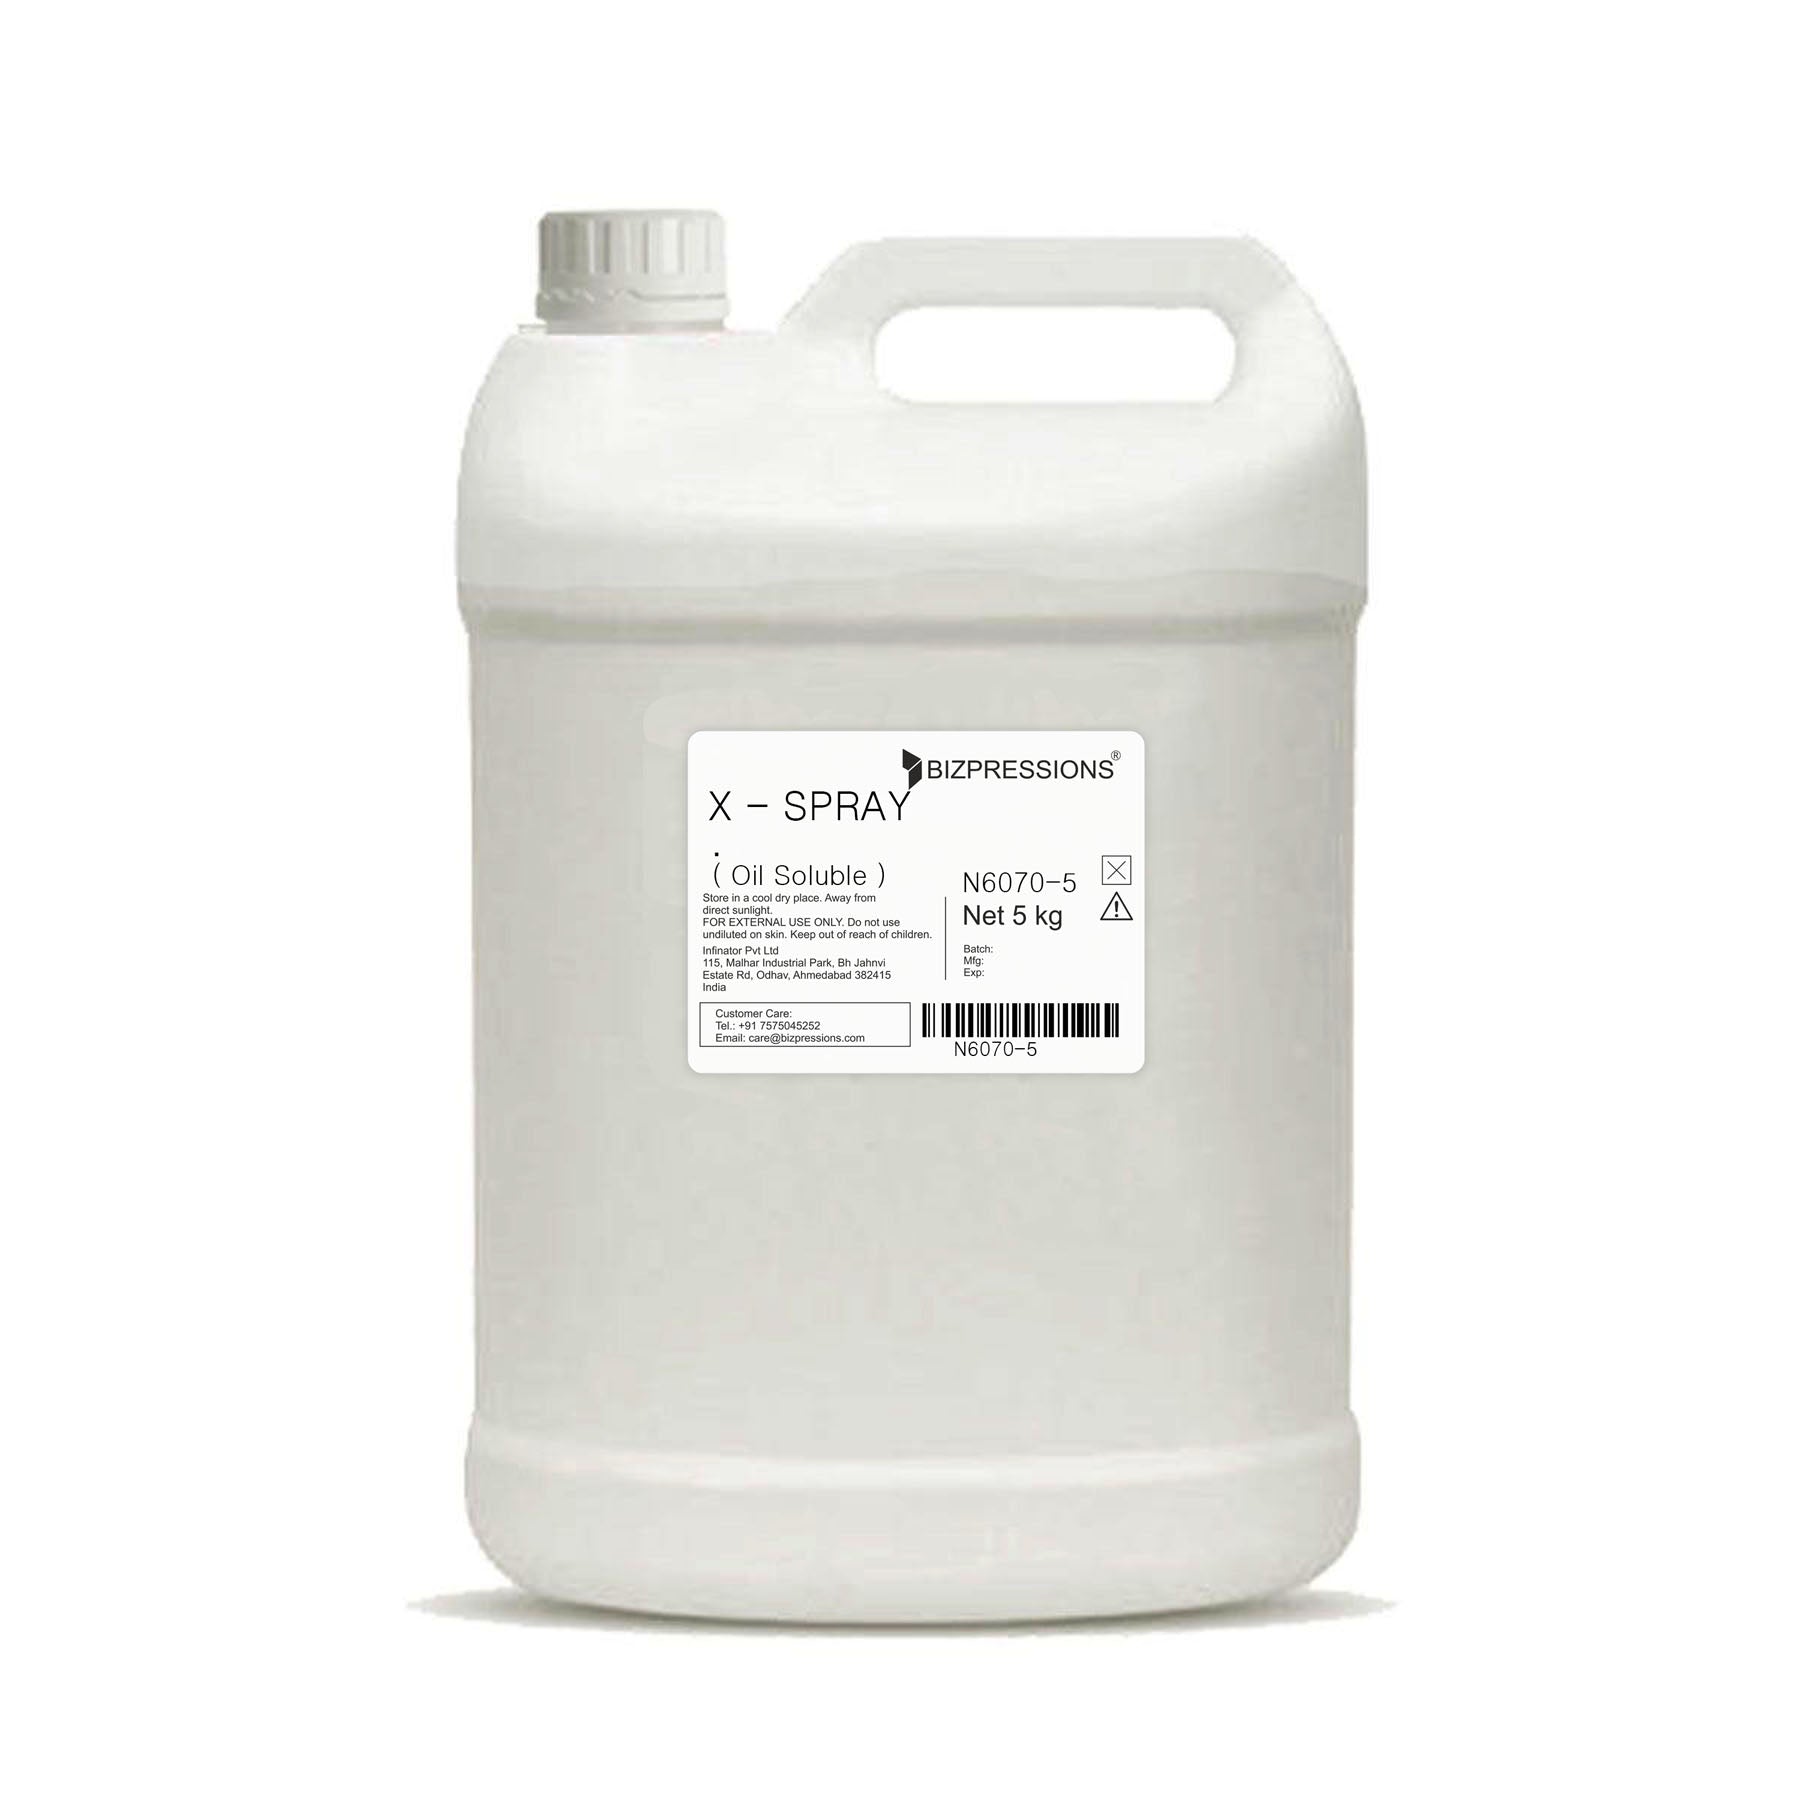 X - SPRAY - Fragrance ( Oil Soluble ) - 5 kg